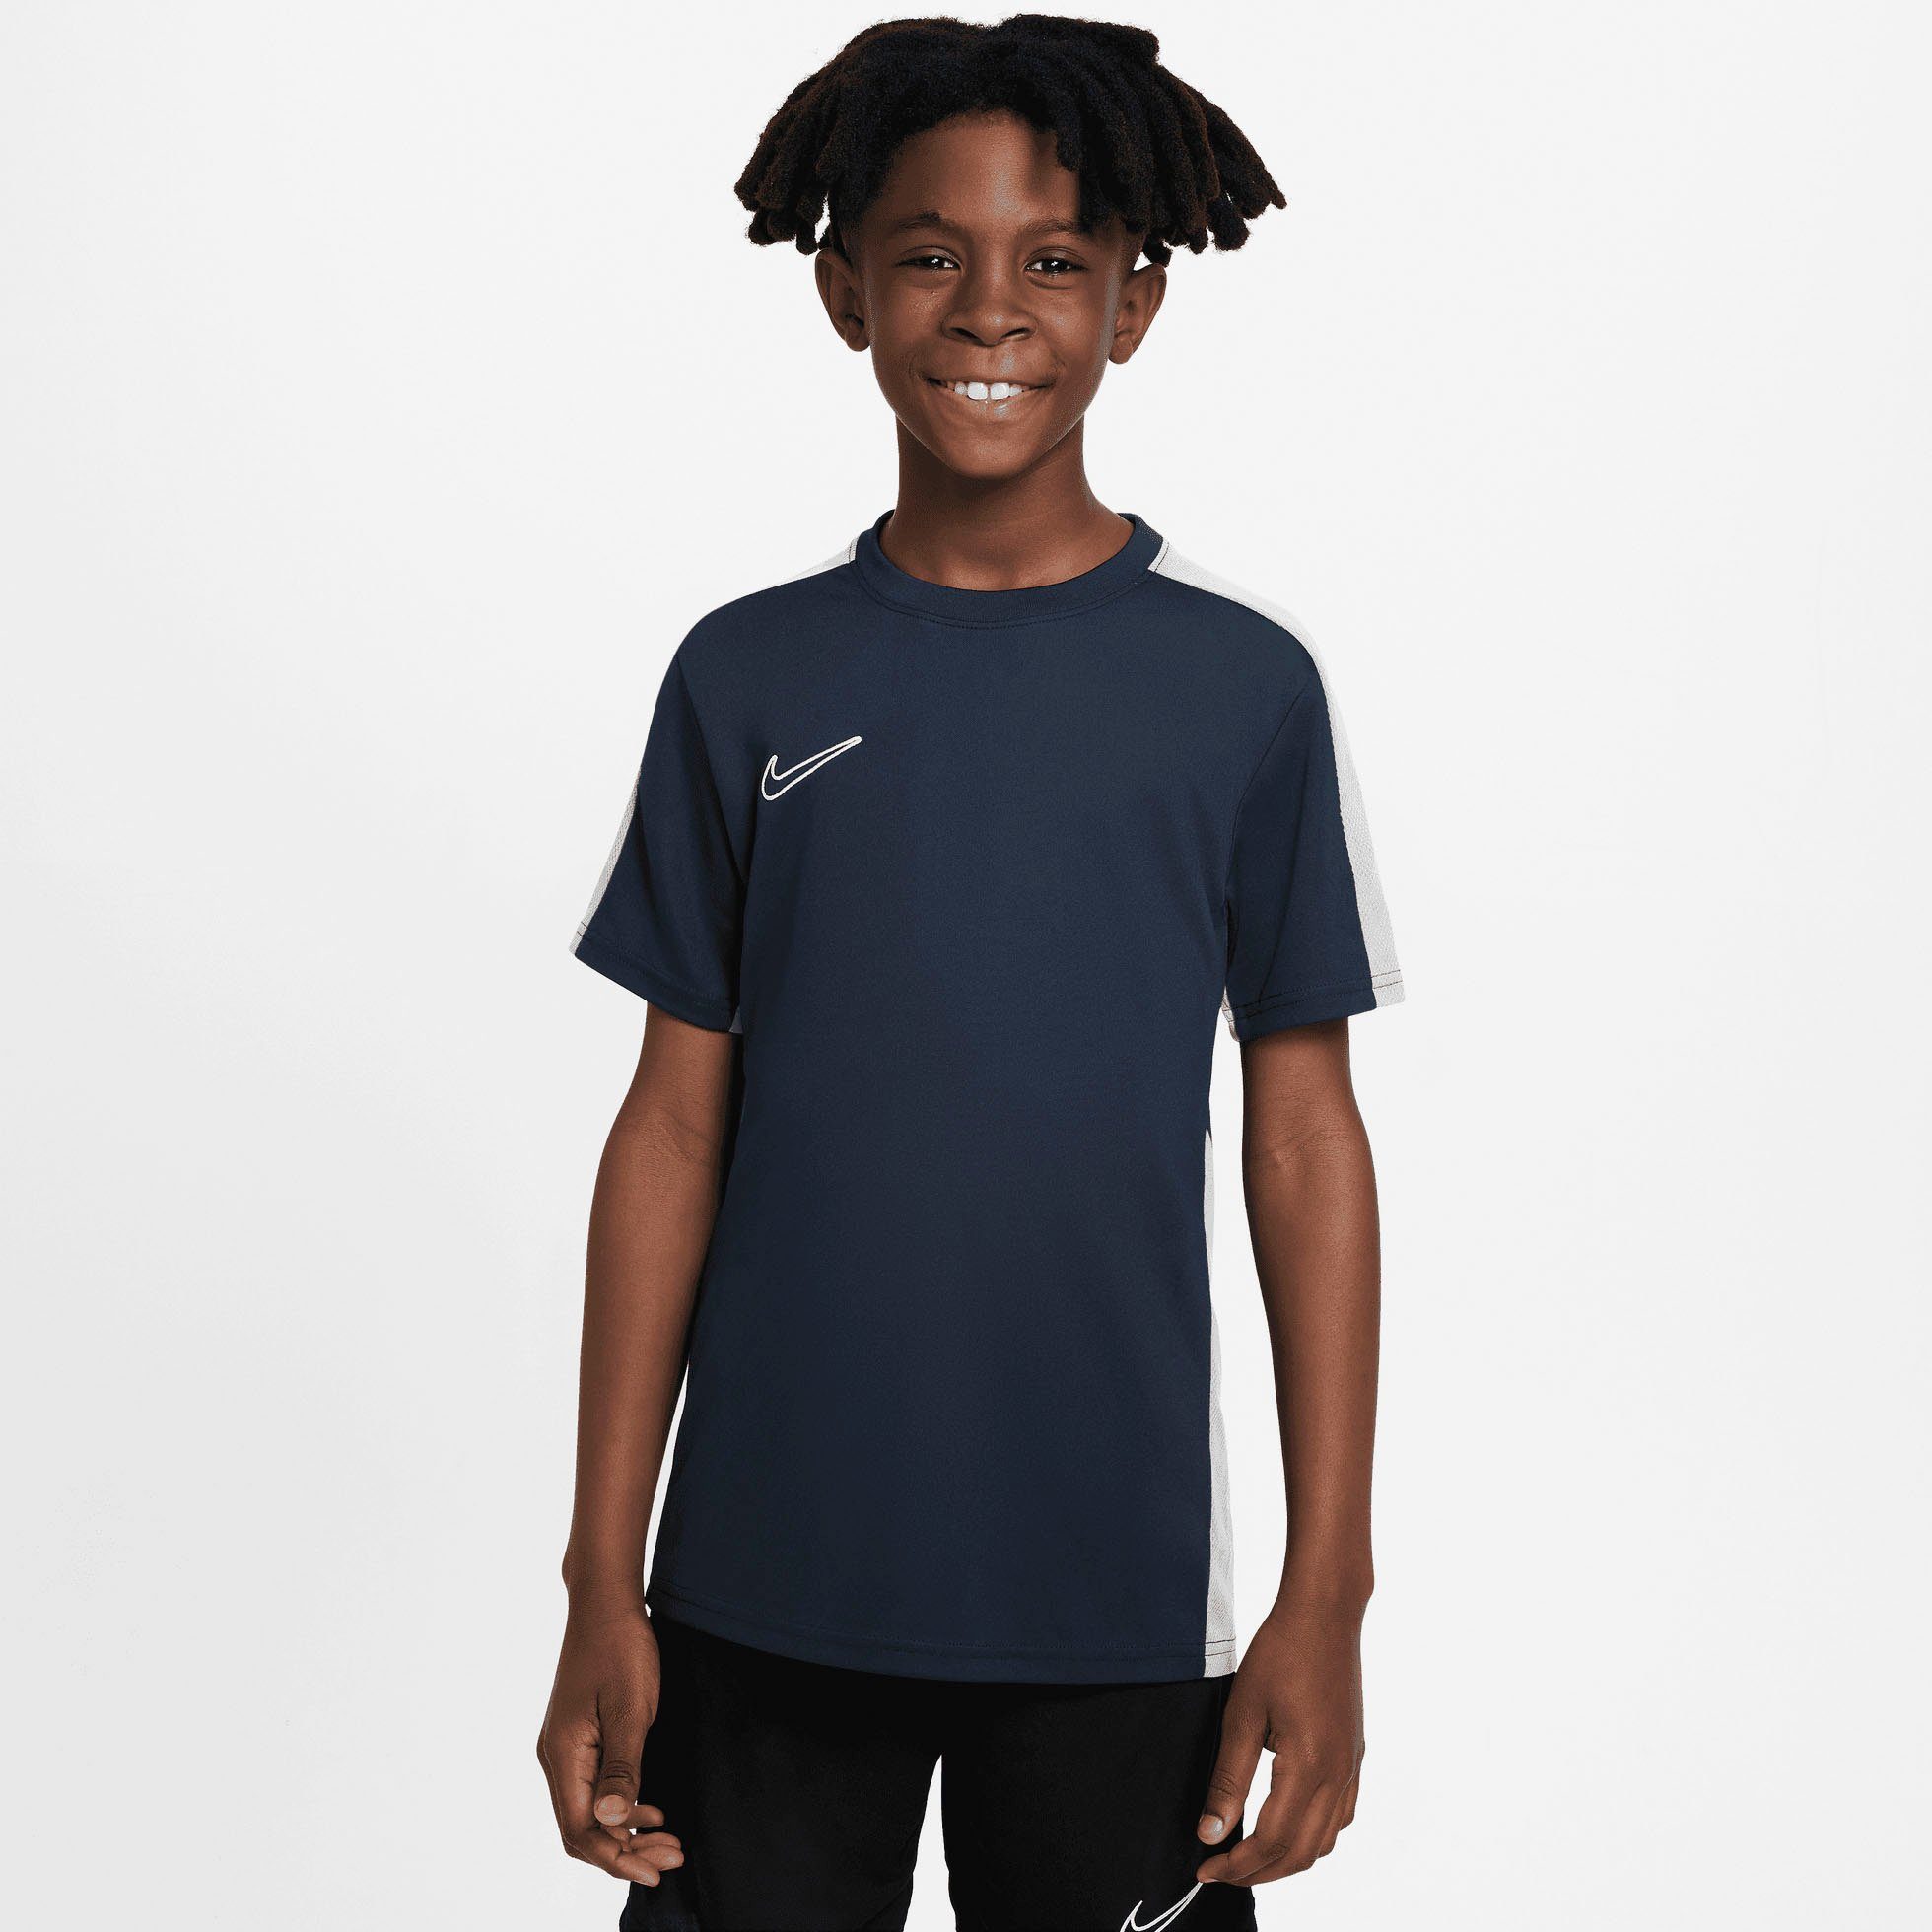 ACADEMY OBSIDIAN/WHITE/WHITE DRI-FIT Trainingsshirt TOP Nike KIDS'